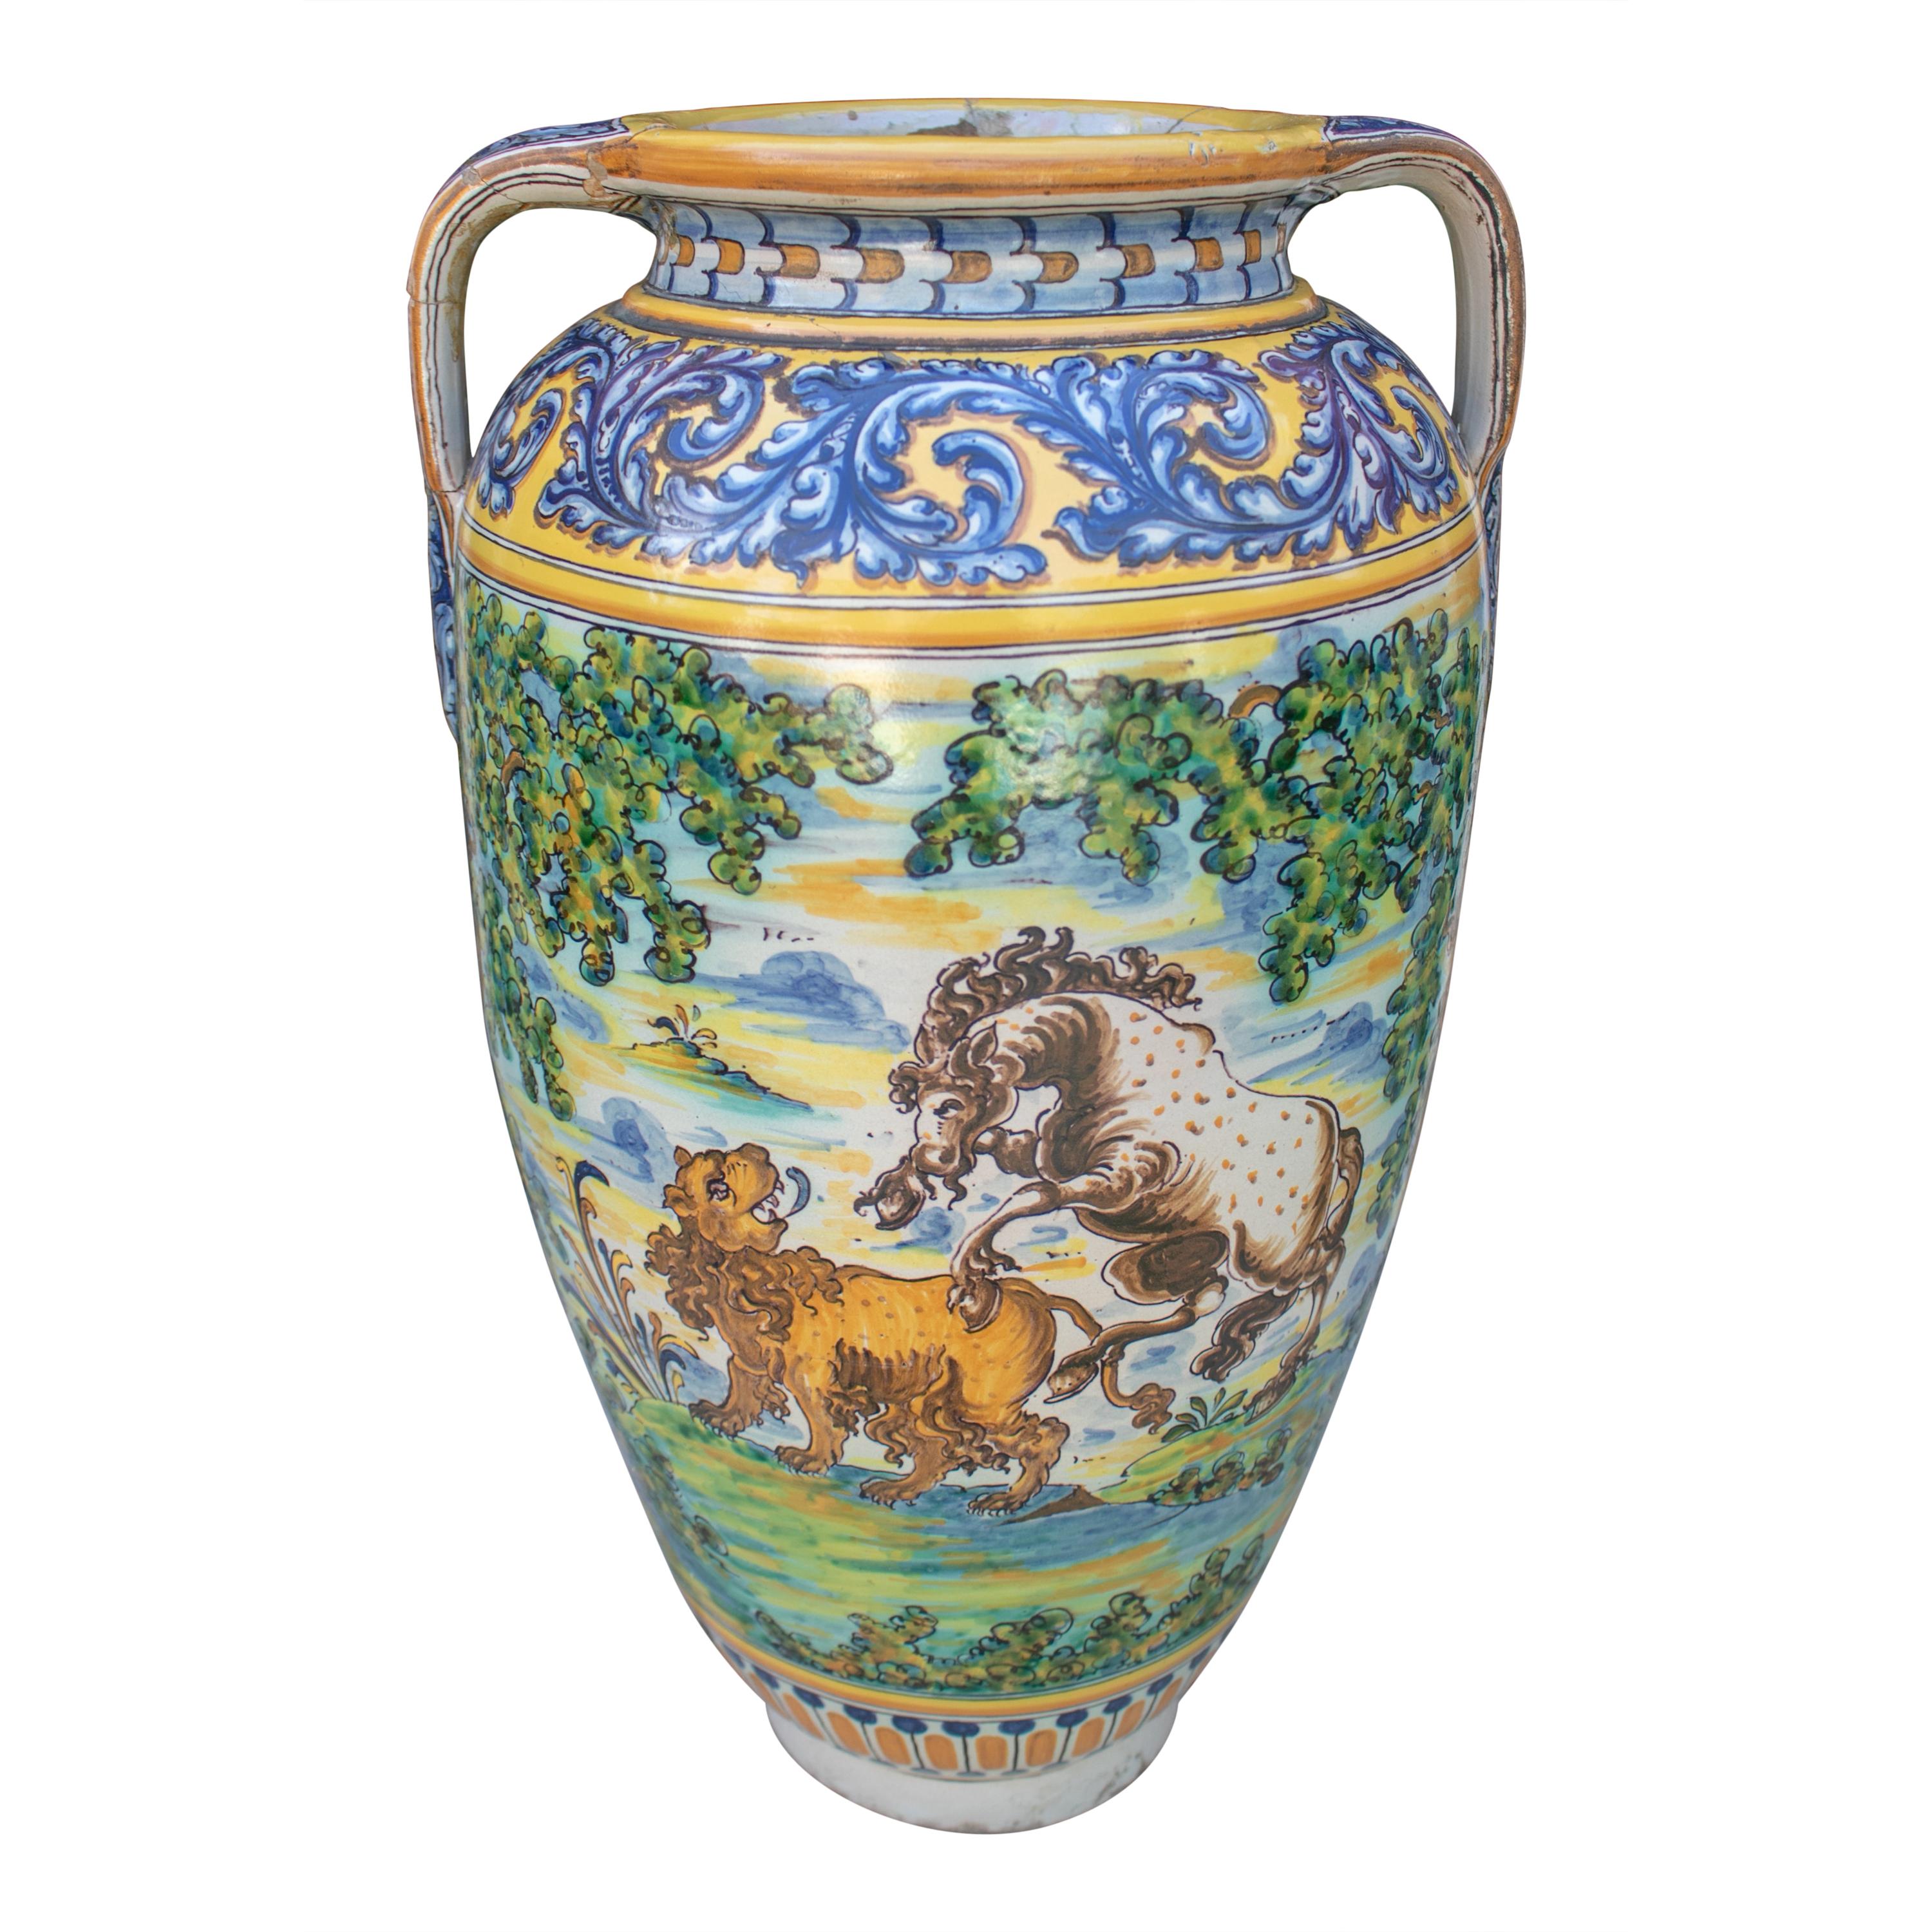 19th Century Spanish Talavera Porcelain Vase with Animals and Horse Rider Scenes